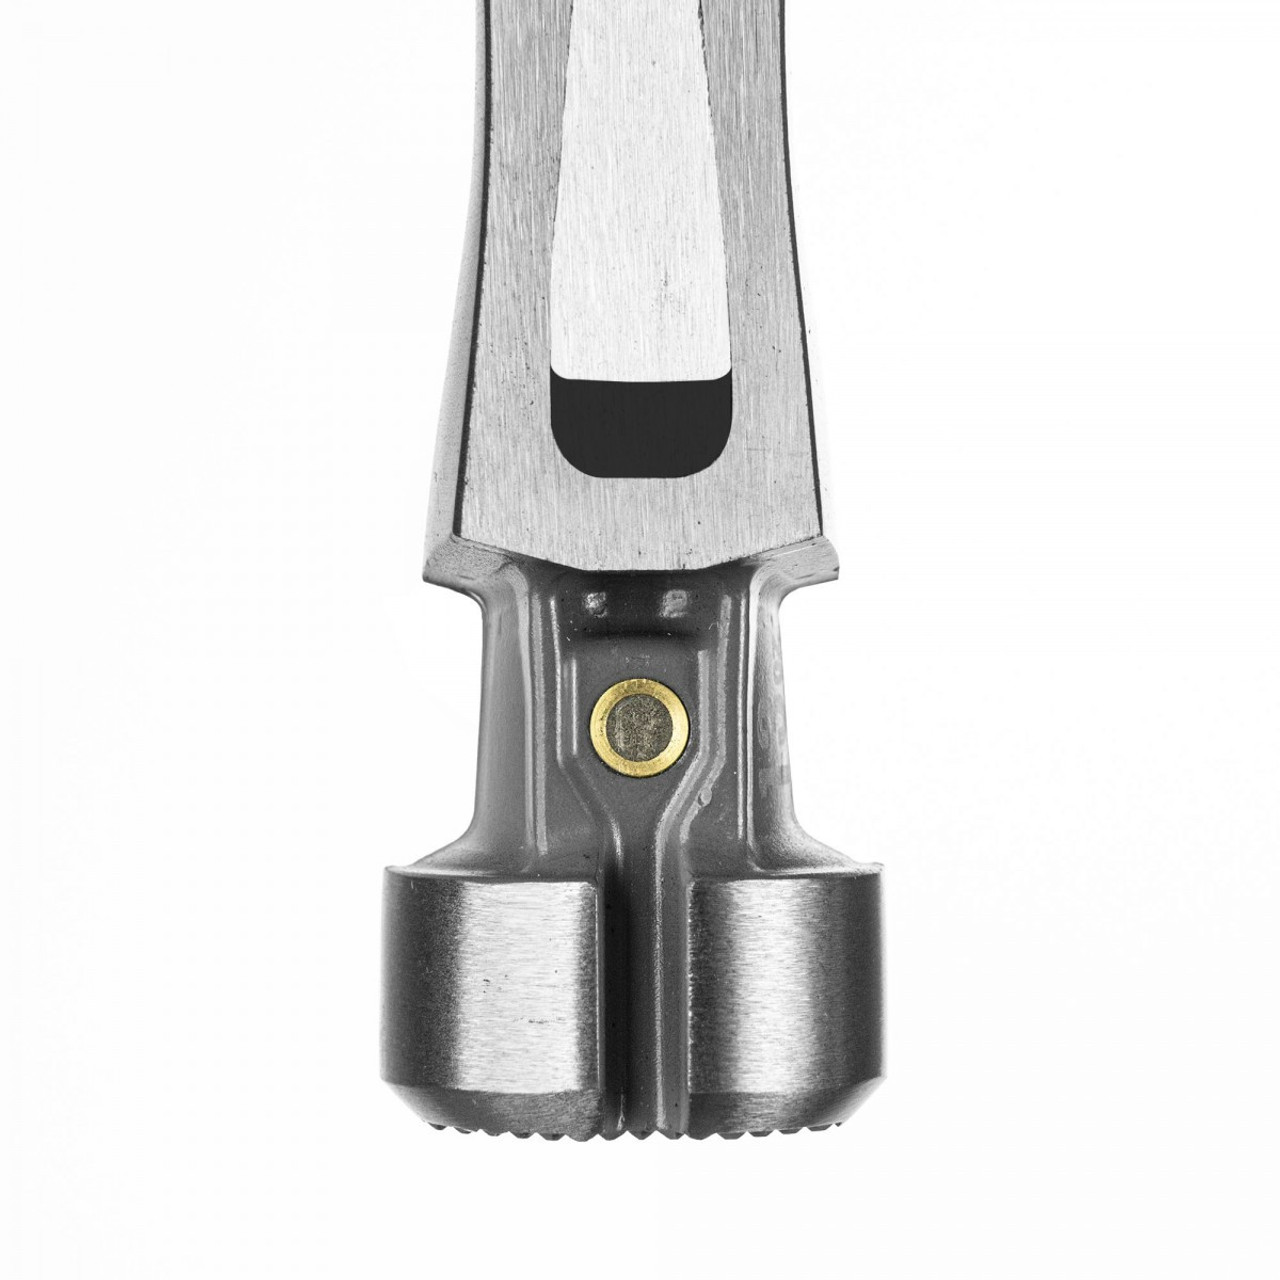 STURNUS Hammer | VELOCITY Milled Face Orange Hammer 13oz with Short Handle